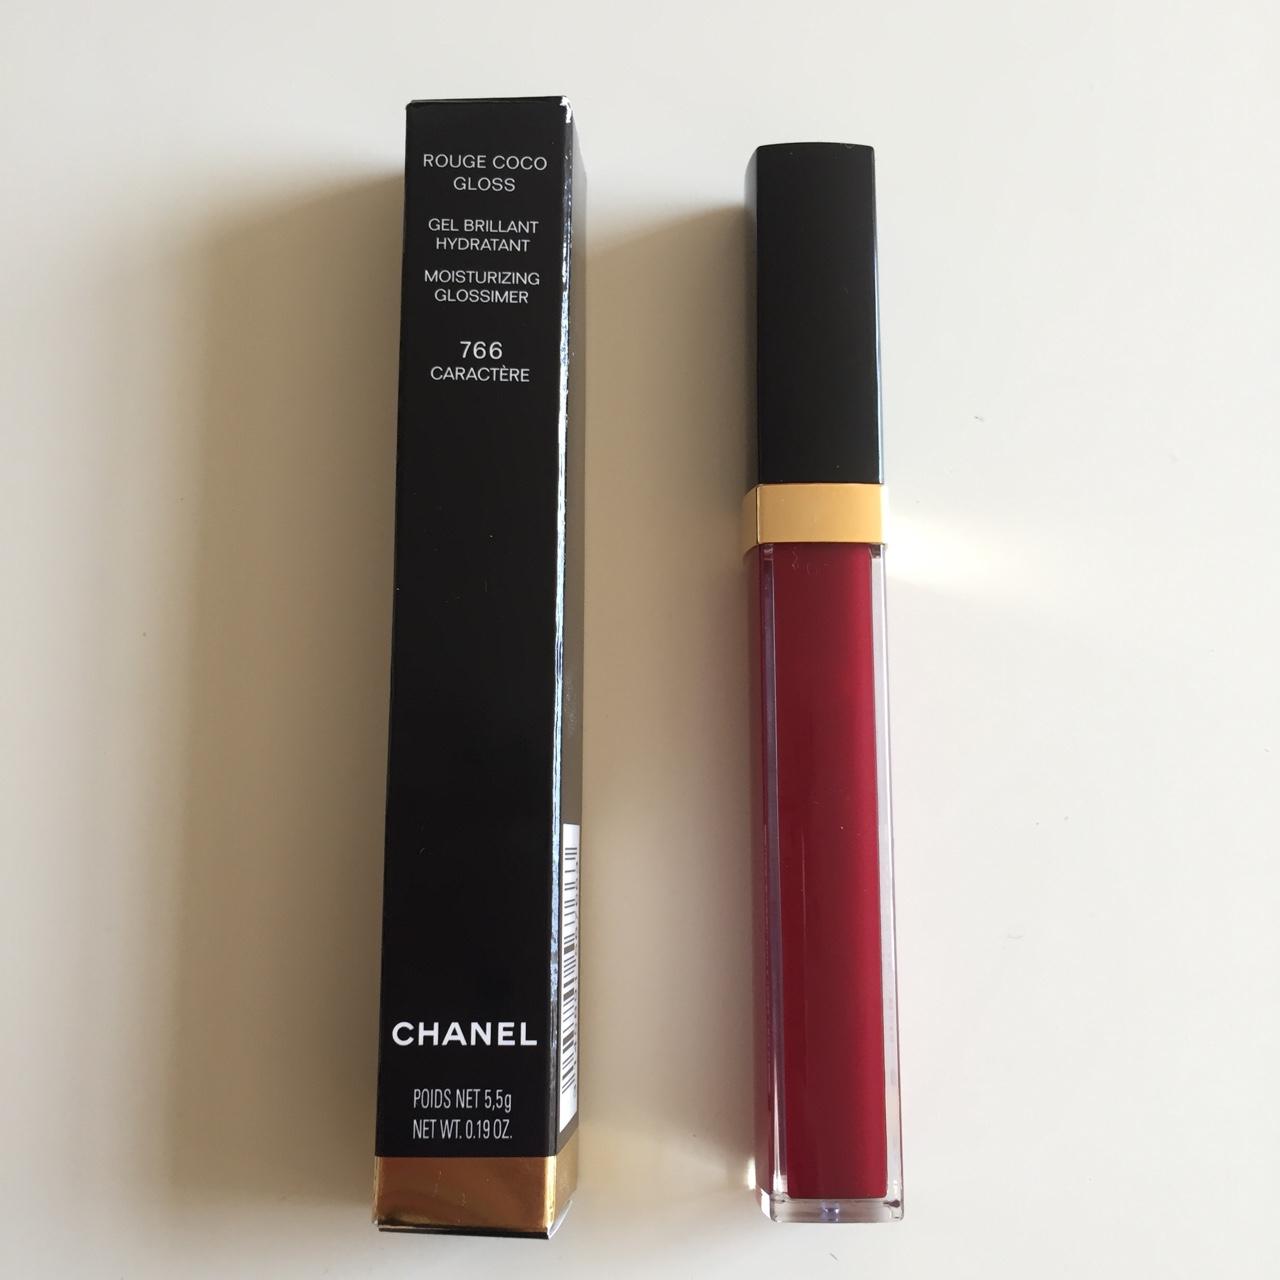 Chanel lipgloss shade 766 Caractere - Depop